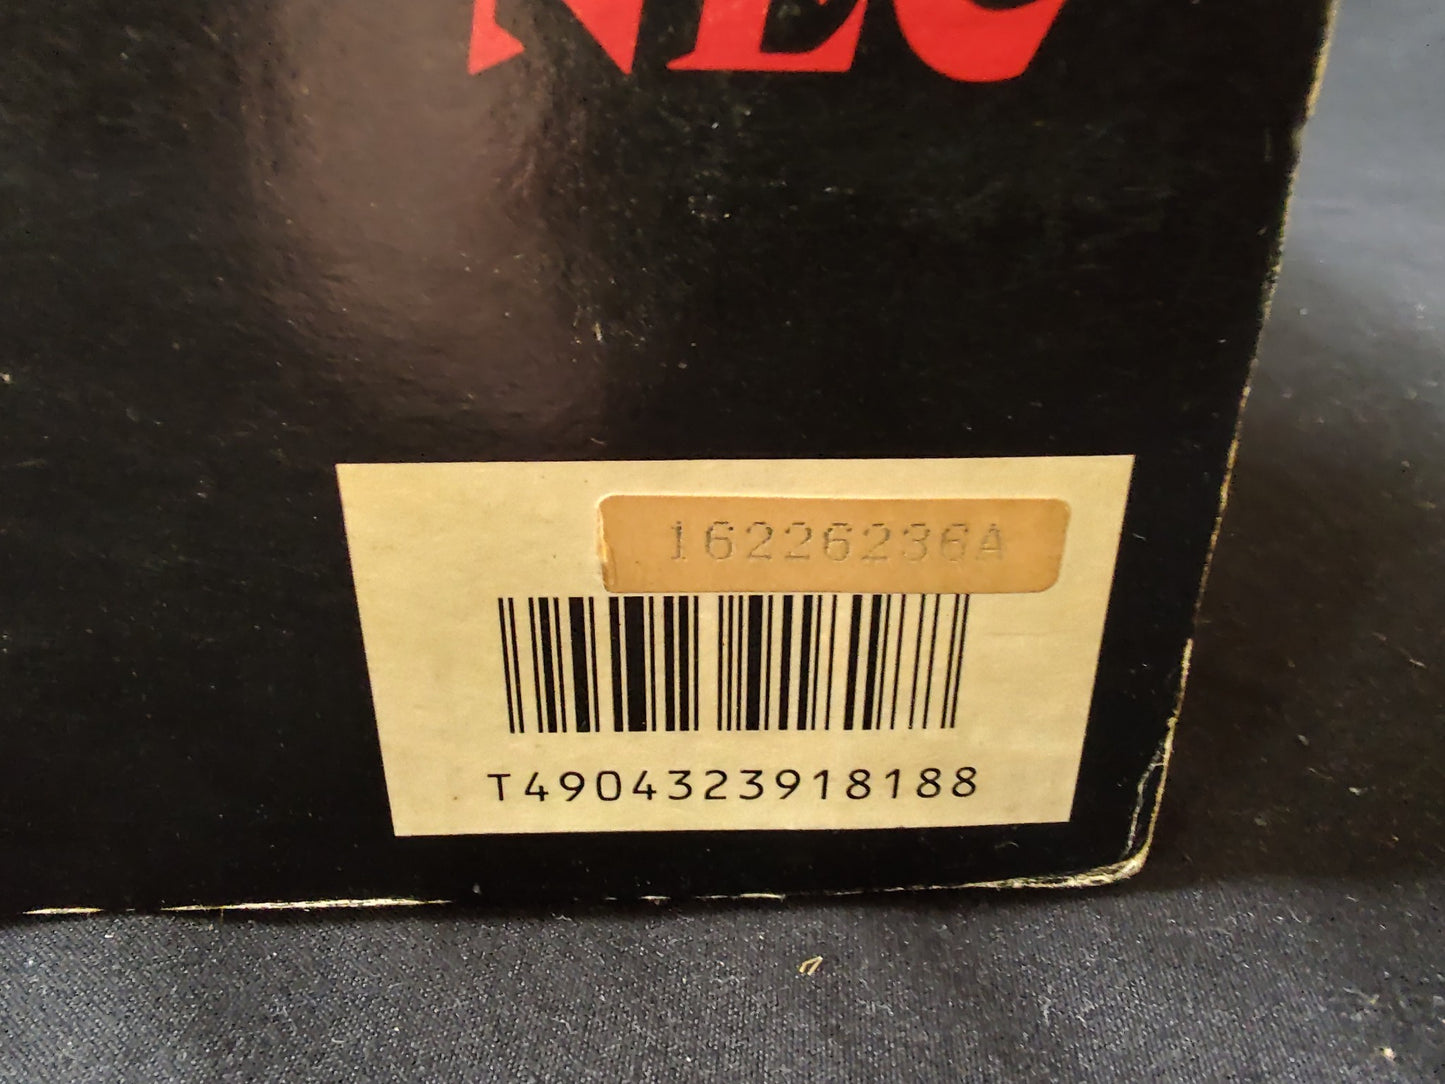 NEC PC Engine Coregrafx2 Console PI-TG7 TurboGrafx16,Pad,AV cable,Box set-f1003-